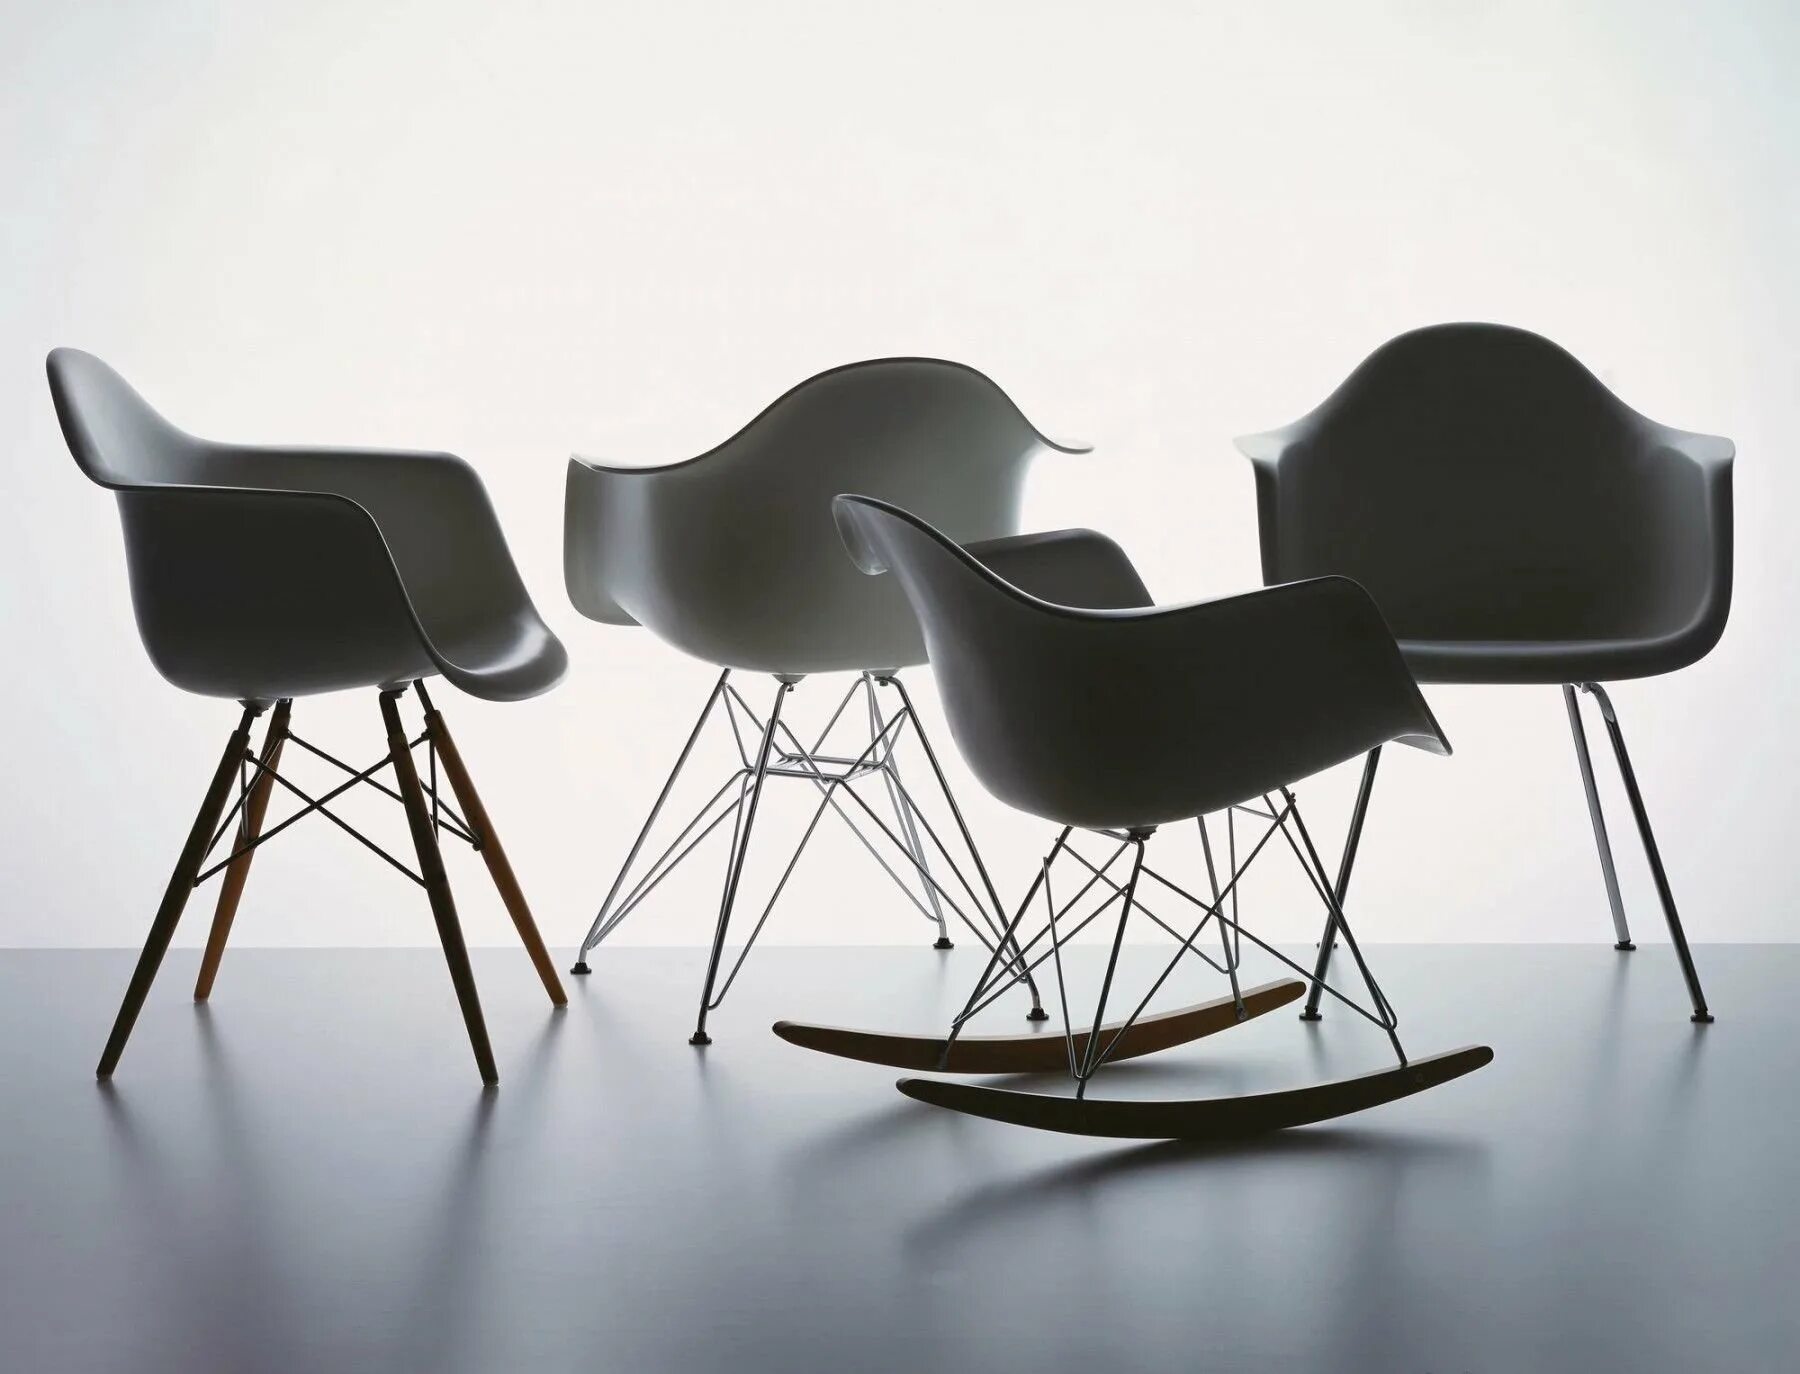 Eames Plastic Chair стулья. Чарльза Имса стул. Стул будущего. Vitra кресло пластик.